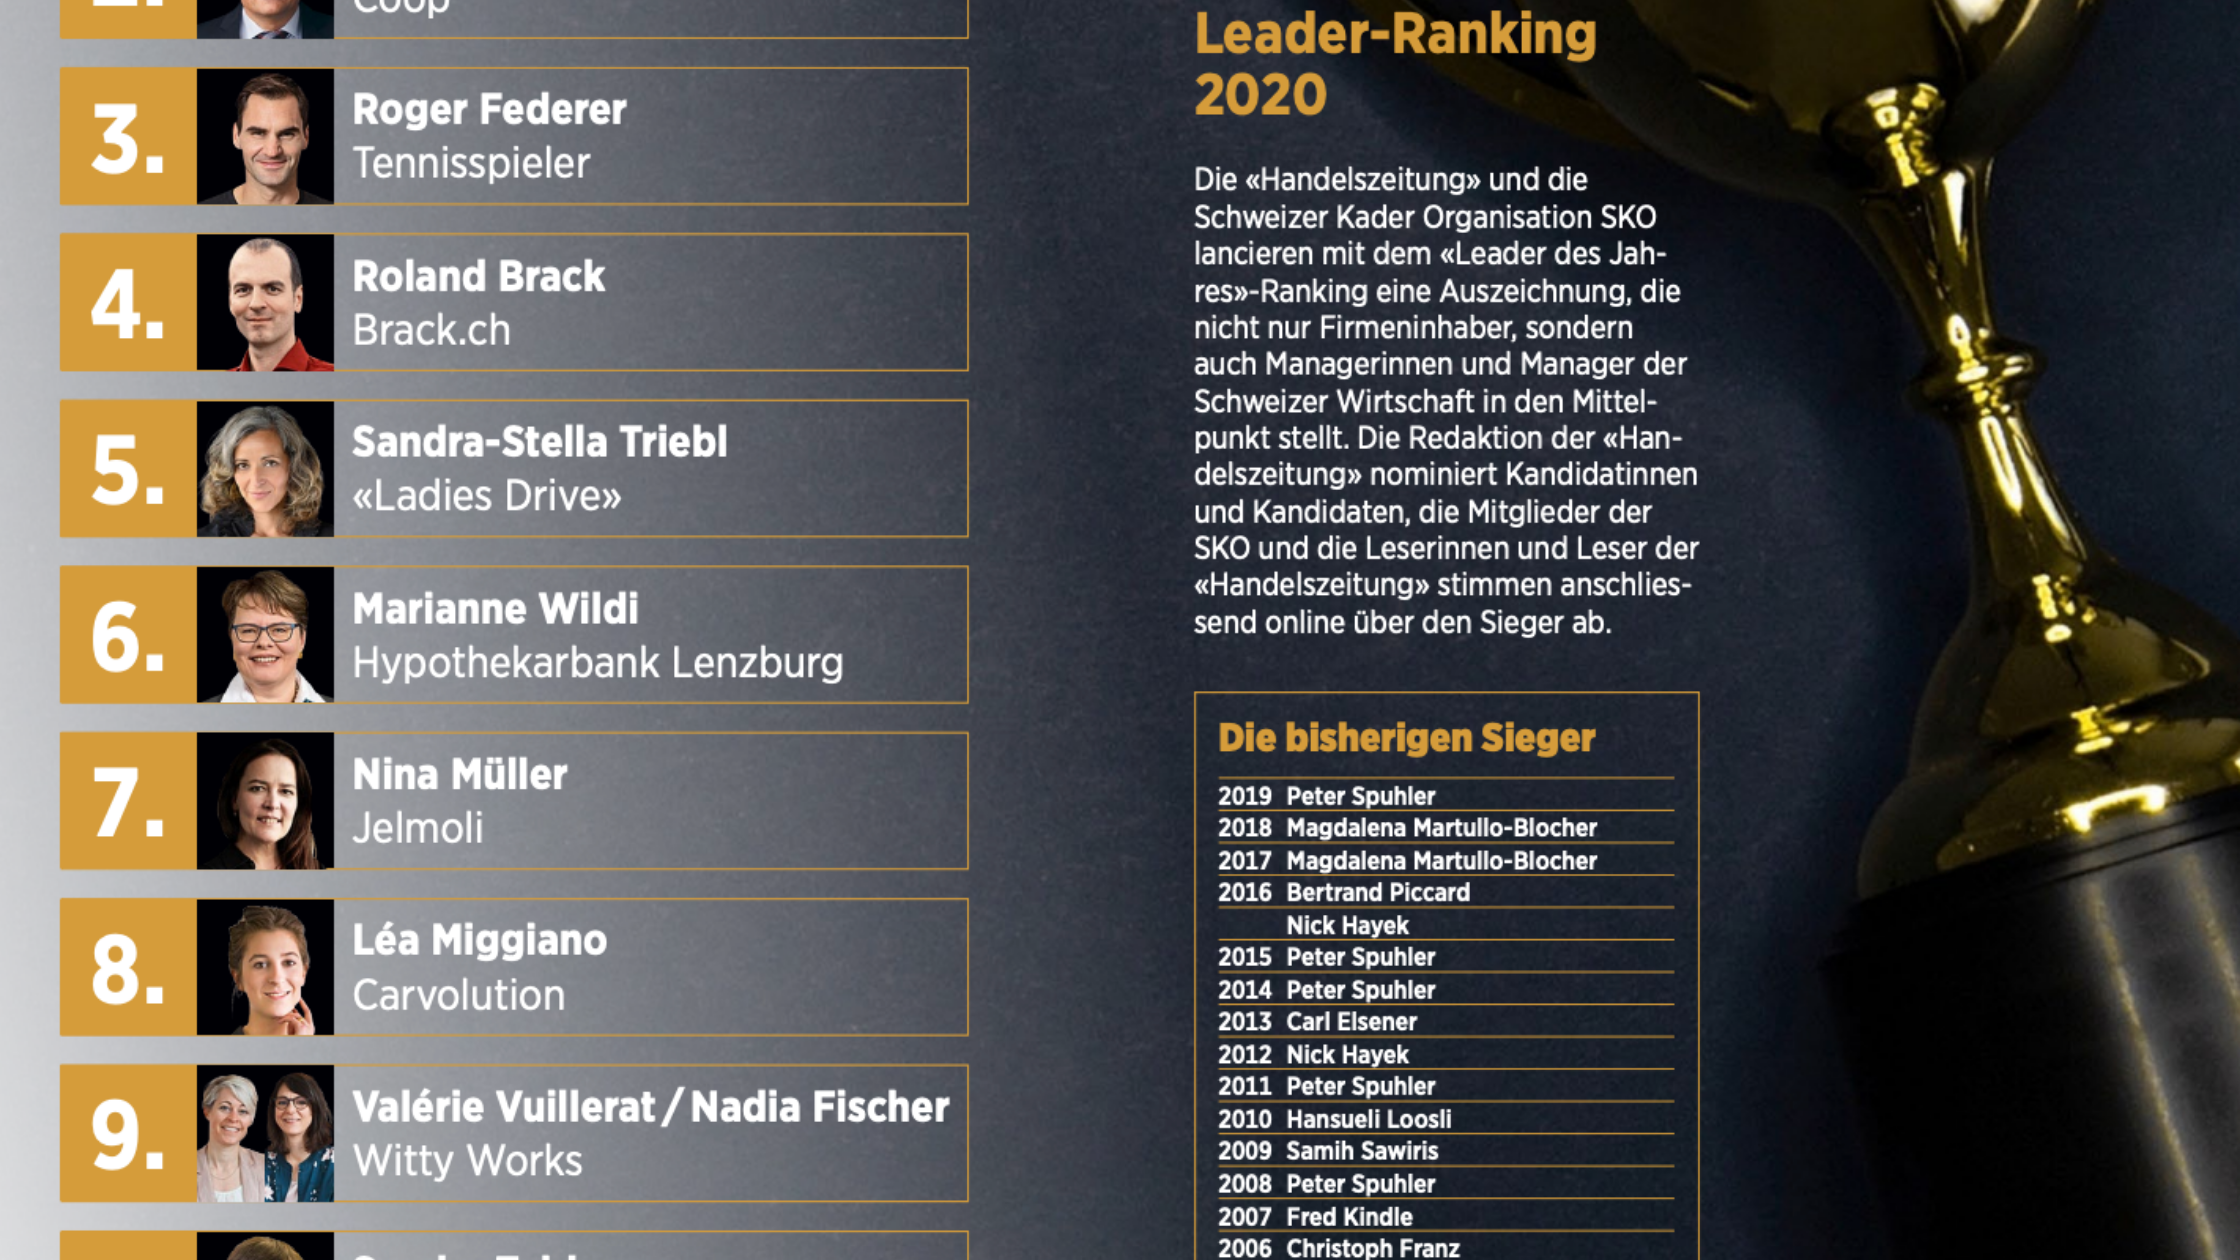 Ranking of Handelzeitung